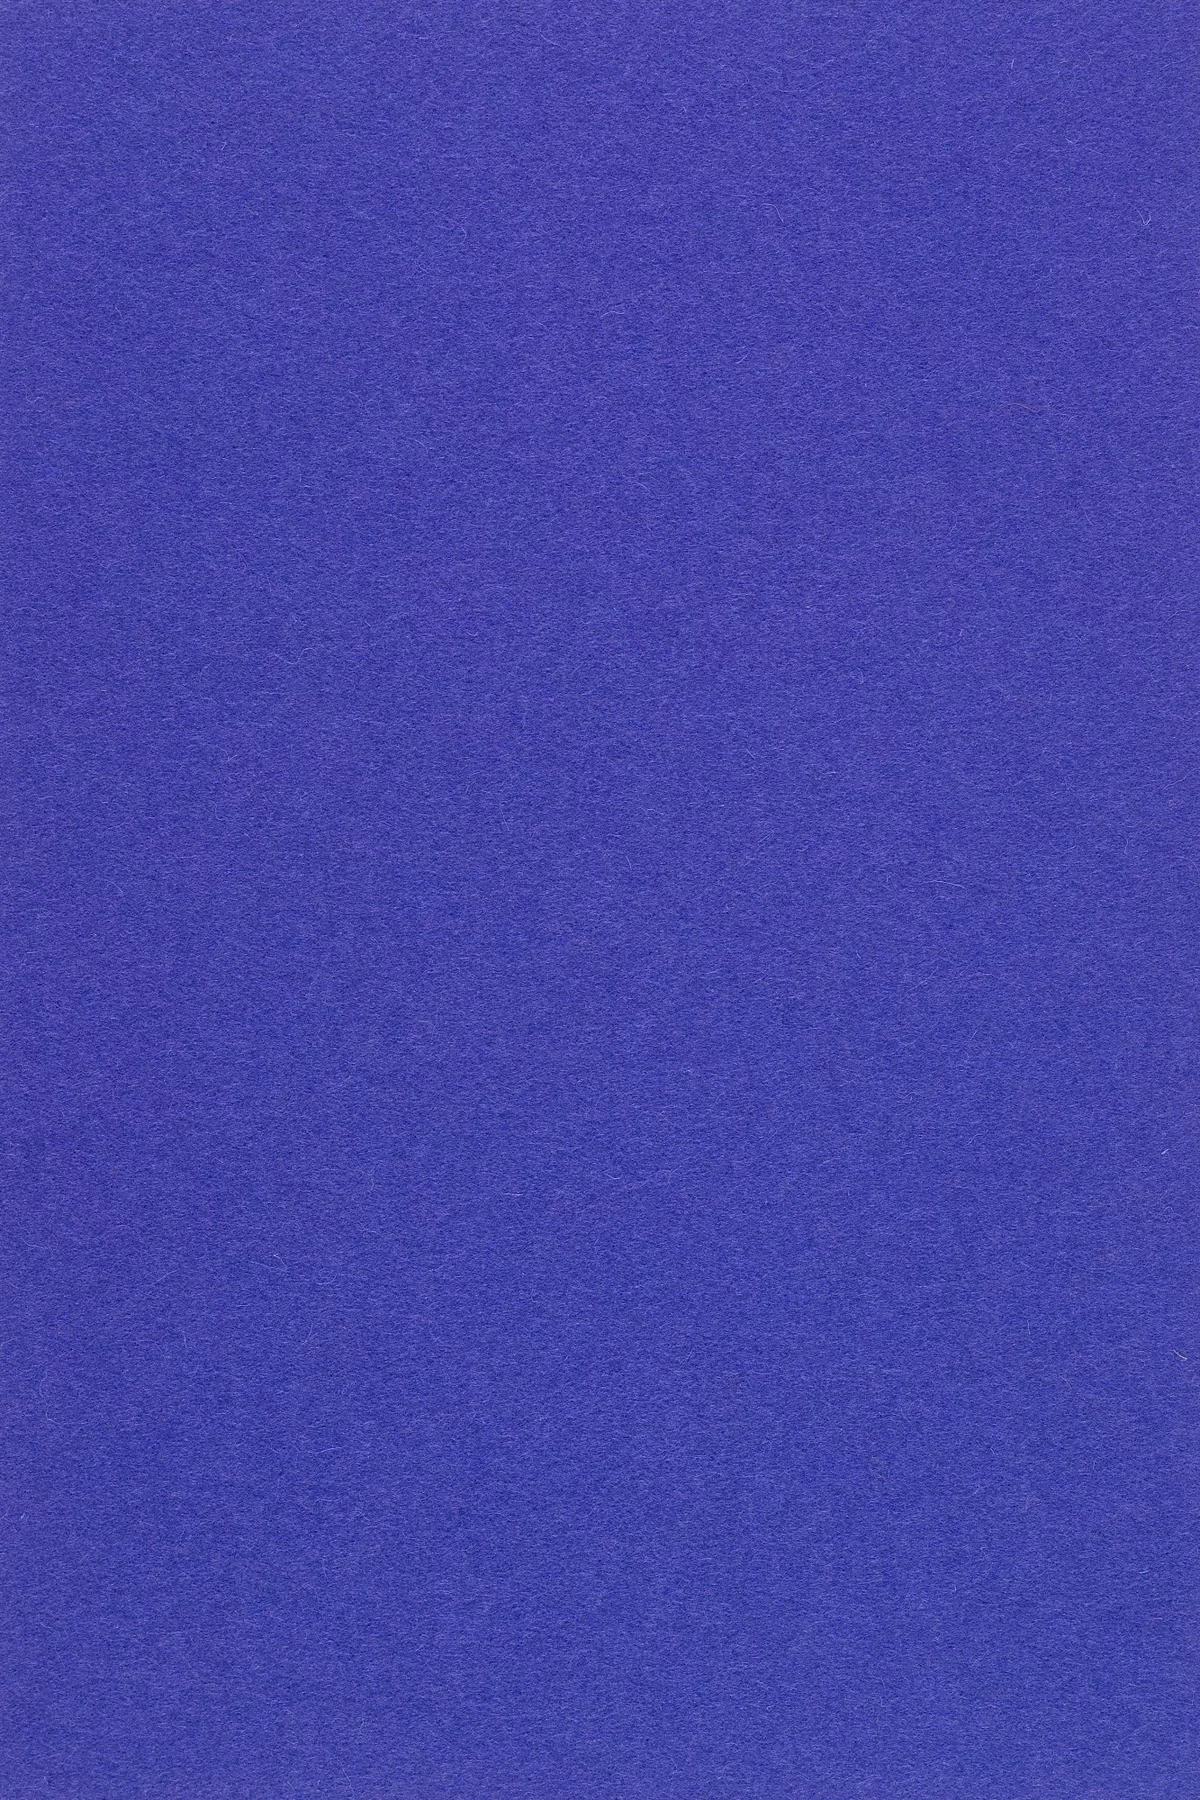 Fabric sample Divina 3 782 blue